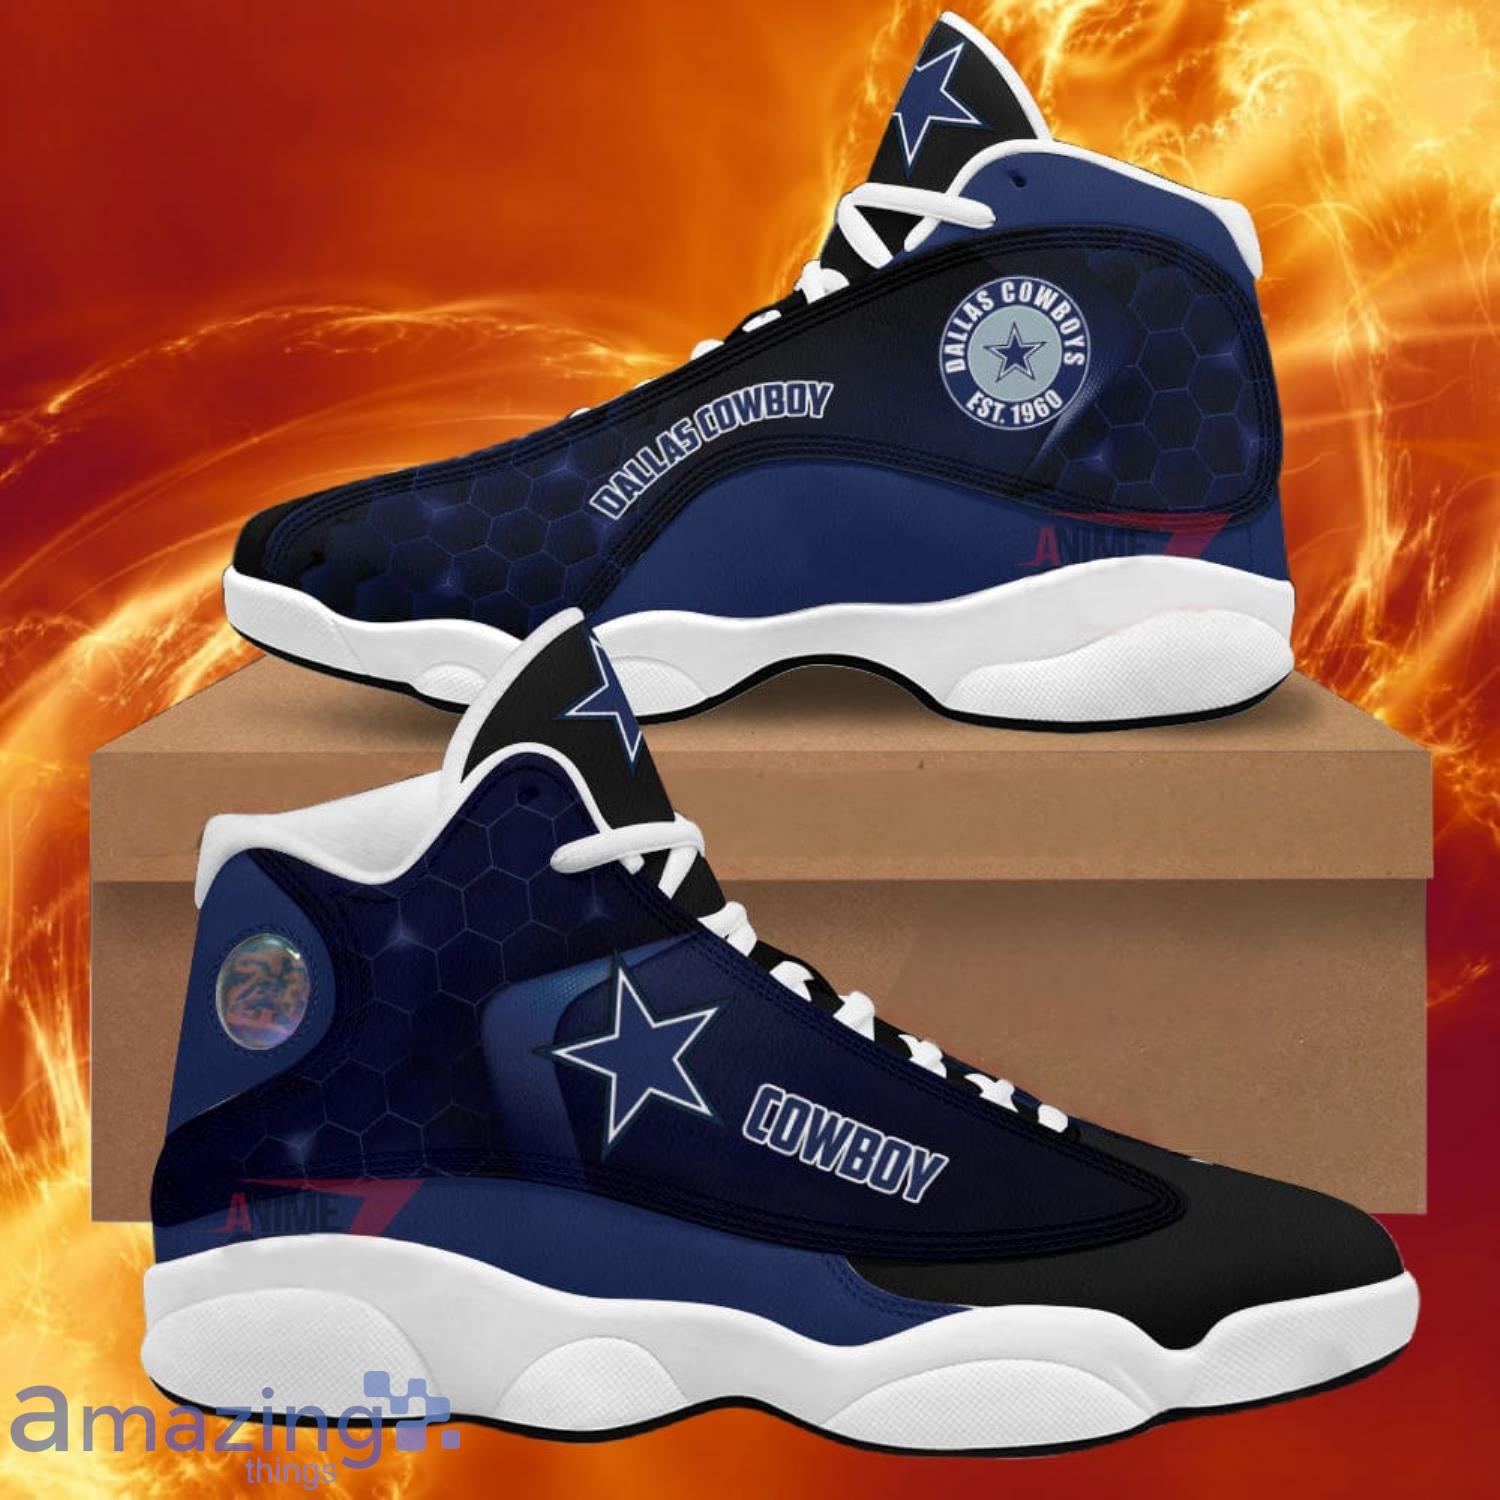 Dallas Cowboys Team Custom Name Air Jordan 13 Shoes For Fans